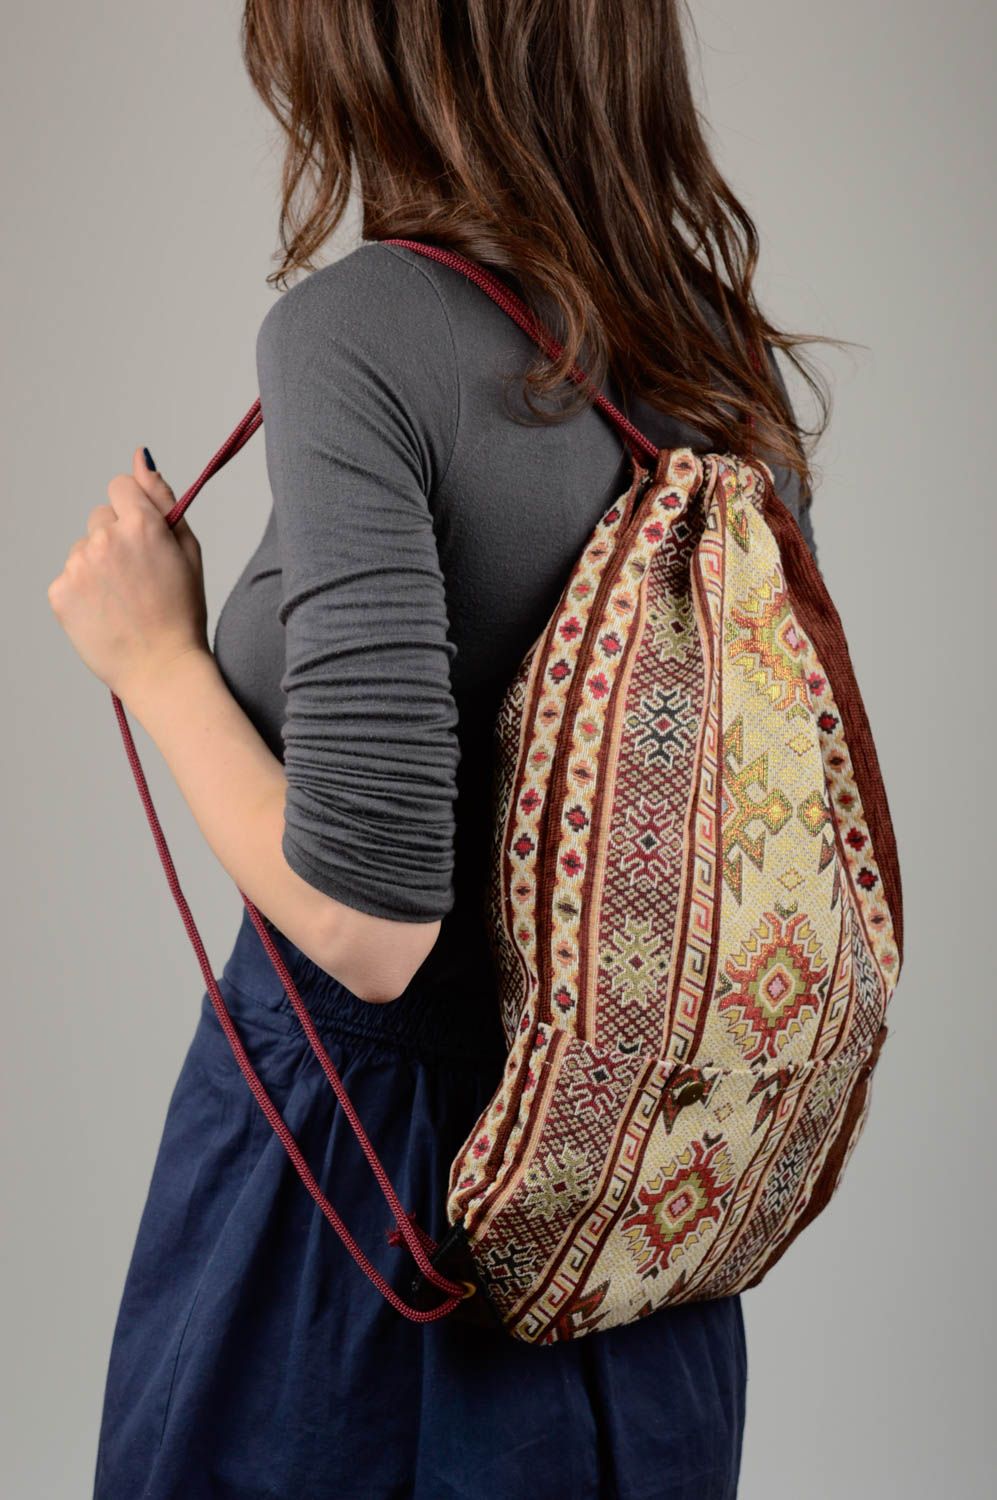 Handmade bag for school unusual backpack designer packback gift ideas photo 2